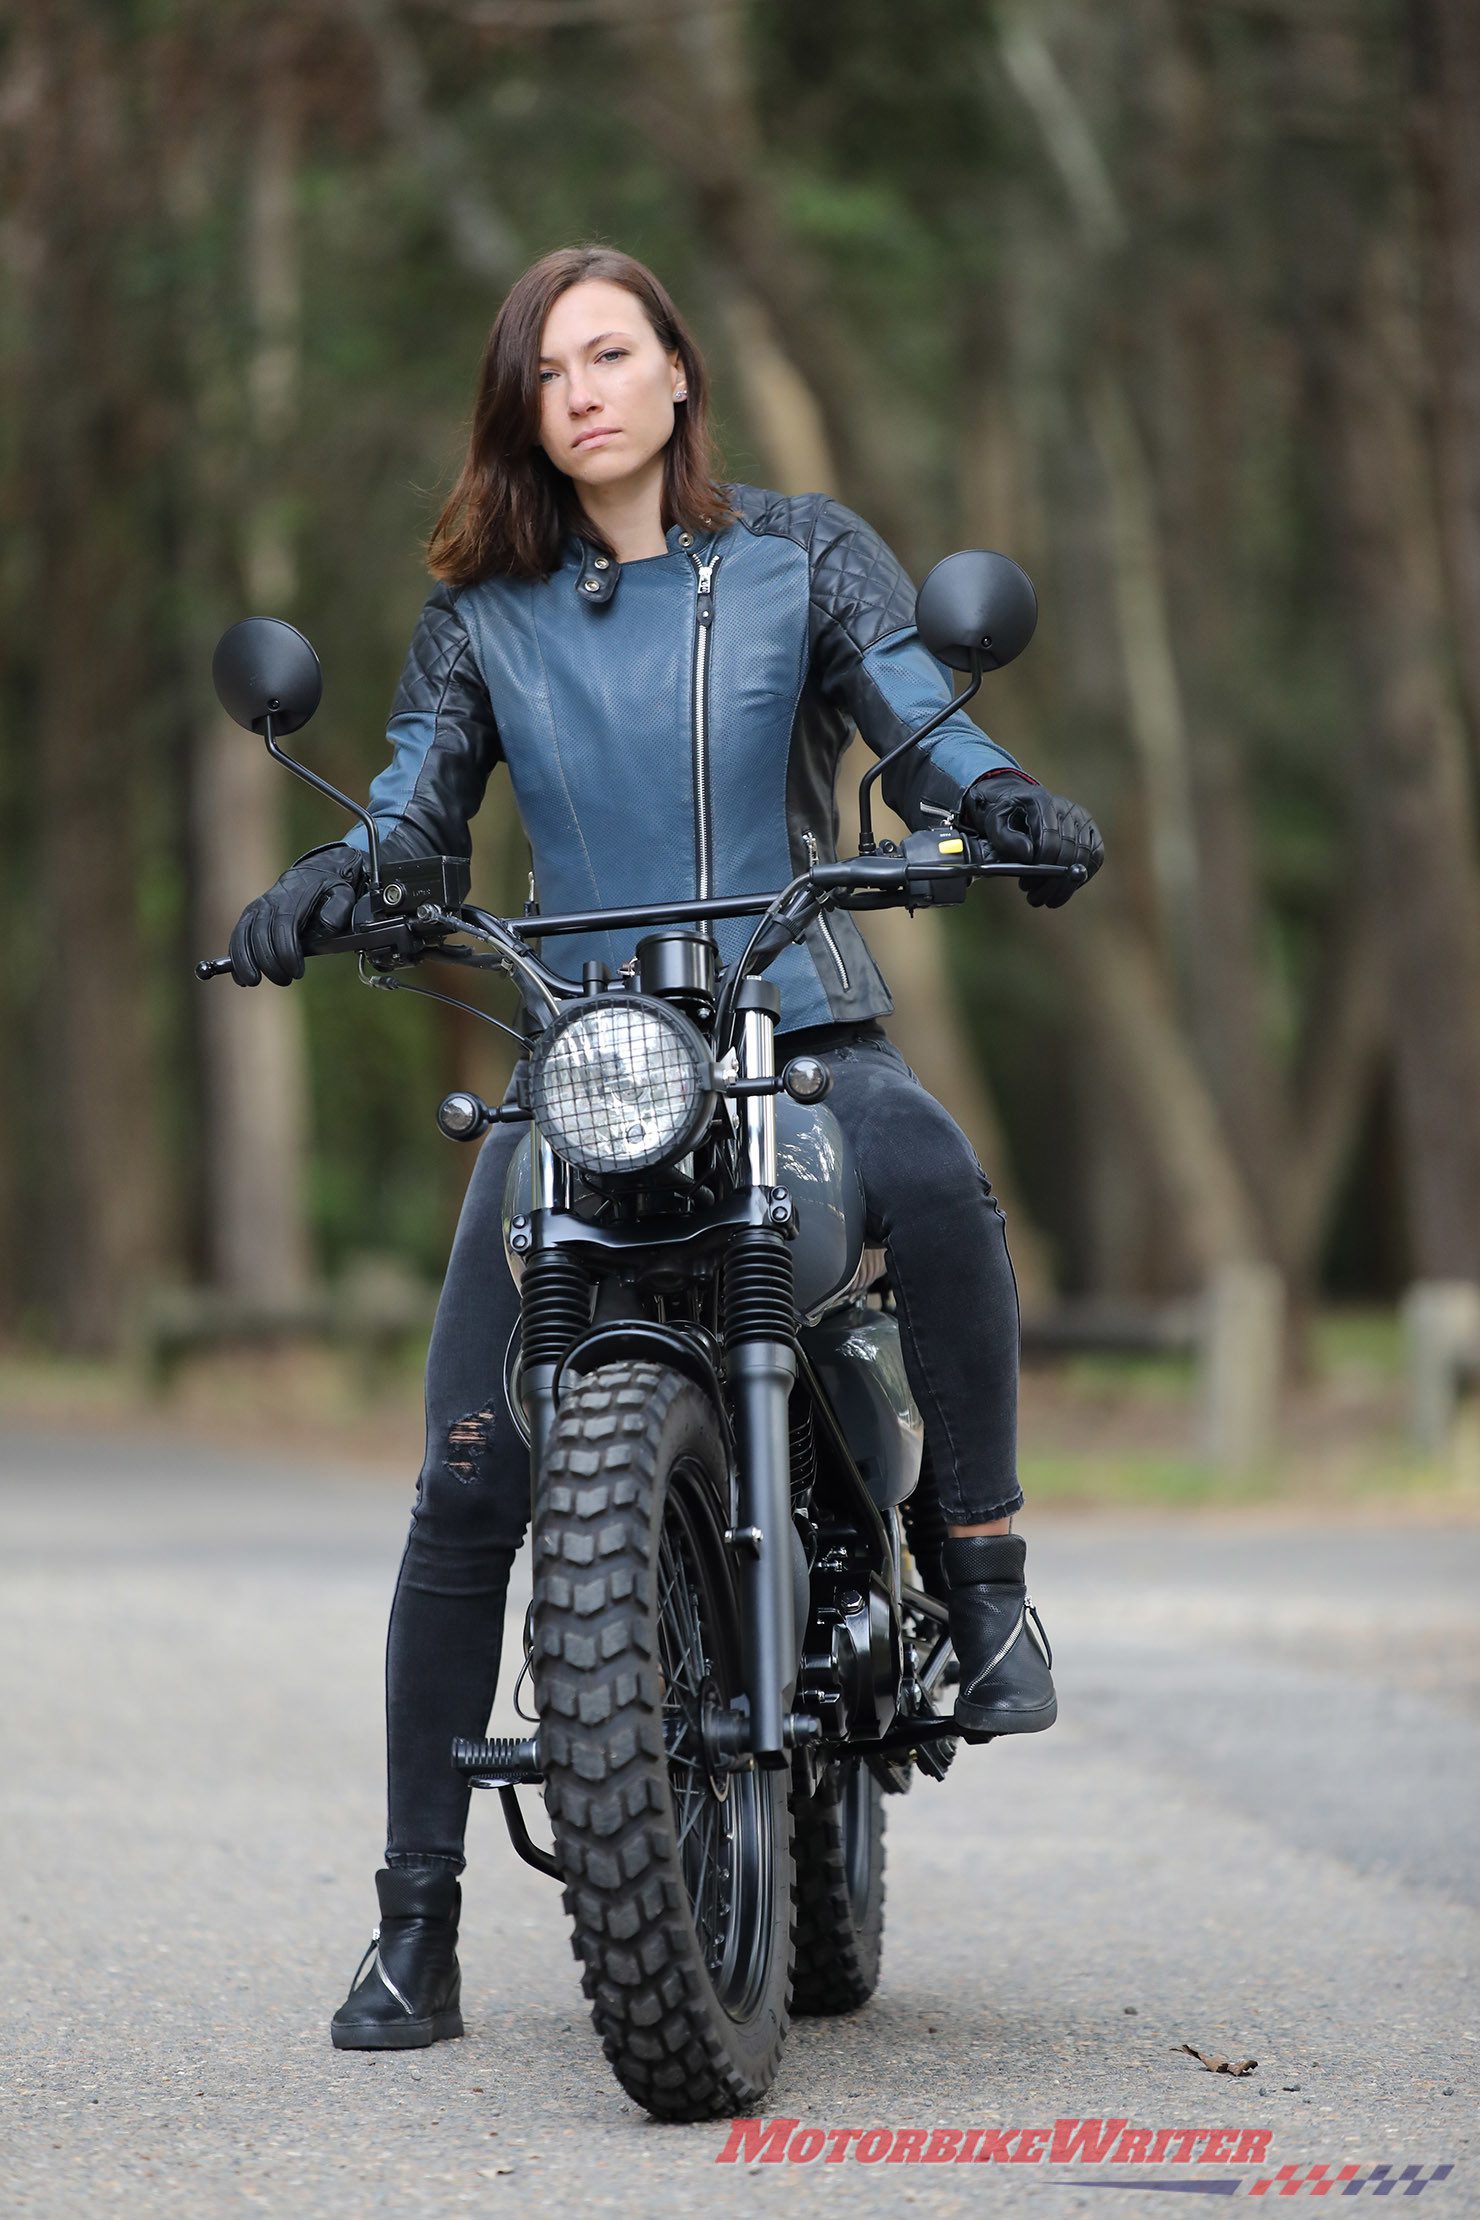 Women who ride motorcycles need gear too - webBikeWorld